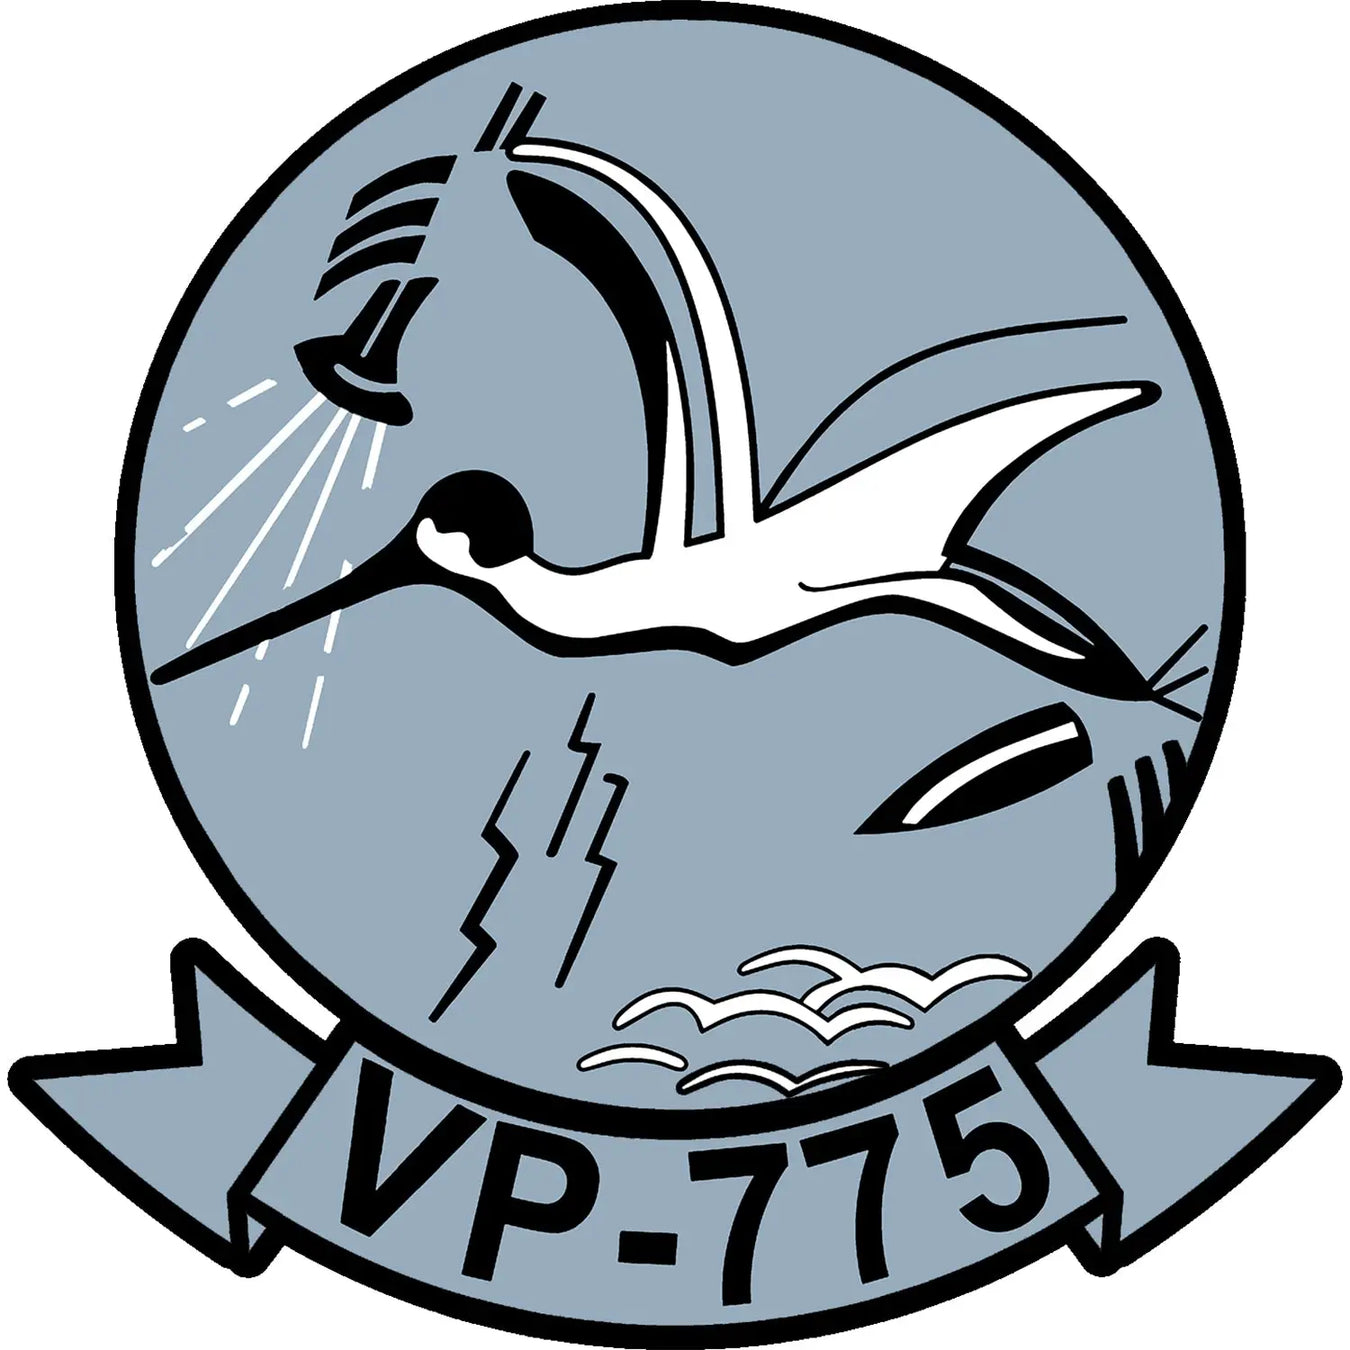 Patrol Squadron 775 (VP-775)